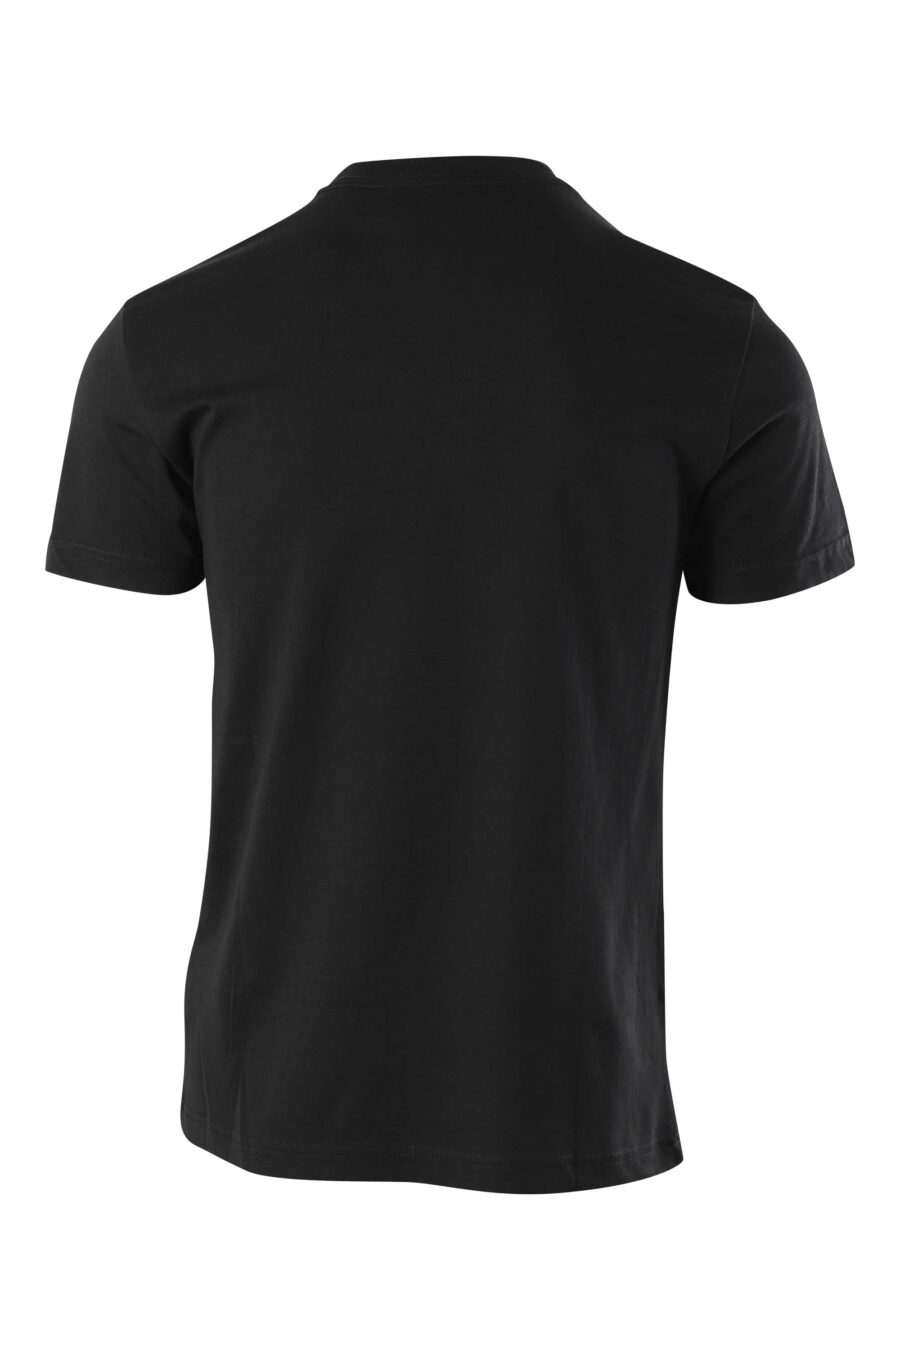 Camiseta negra con minilogo redondo blanco - 8052019325225 2